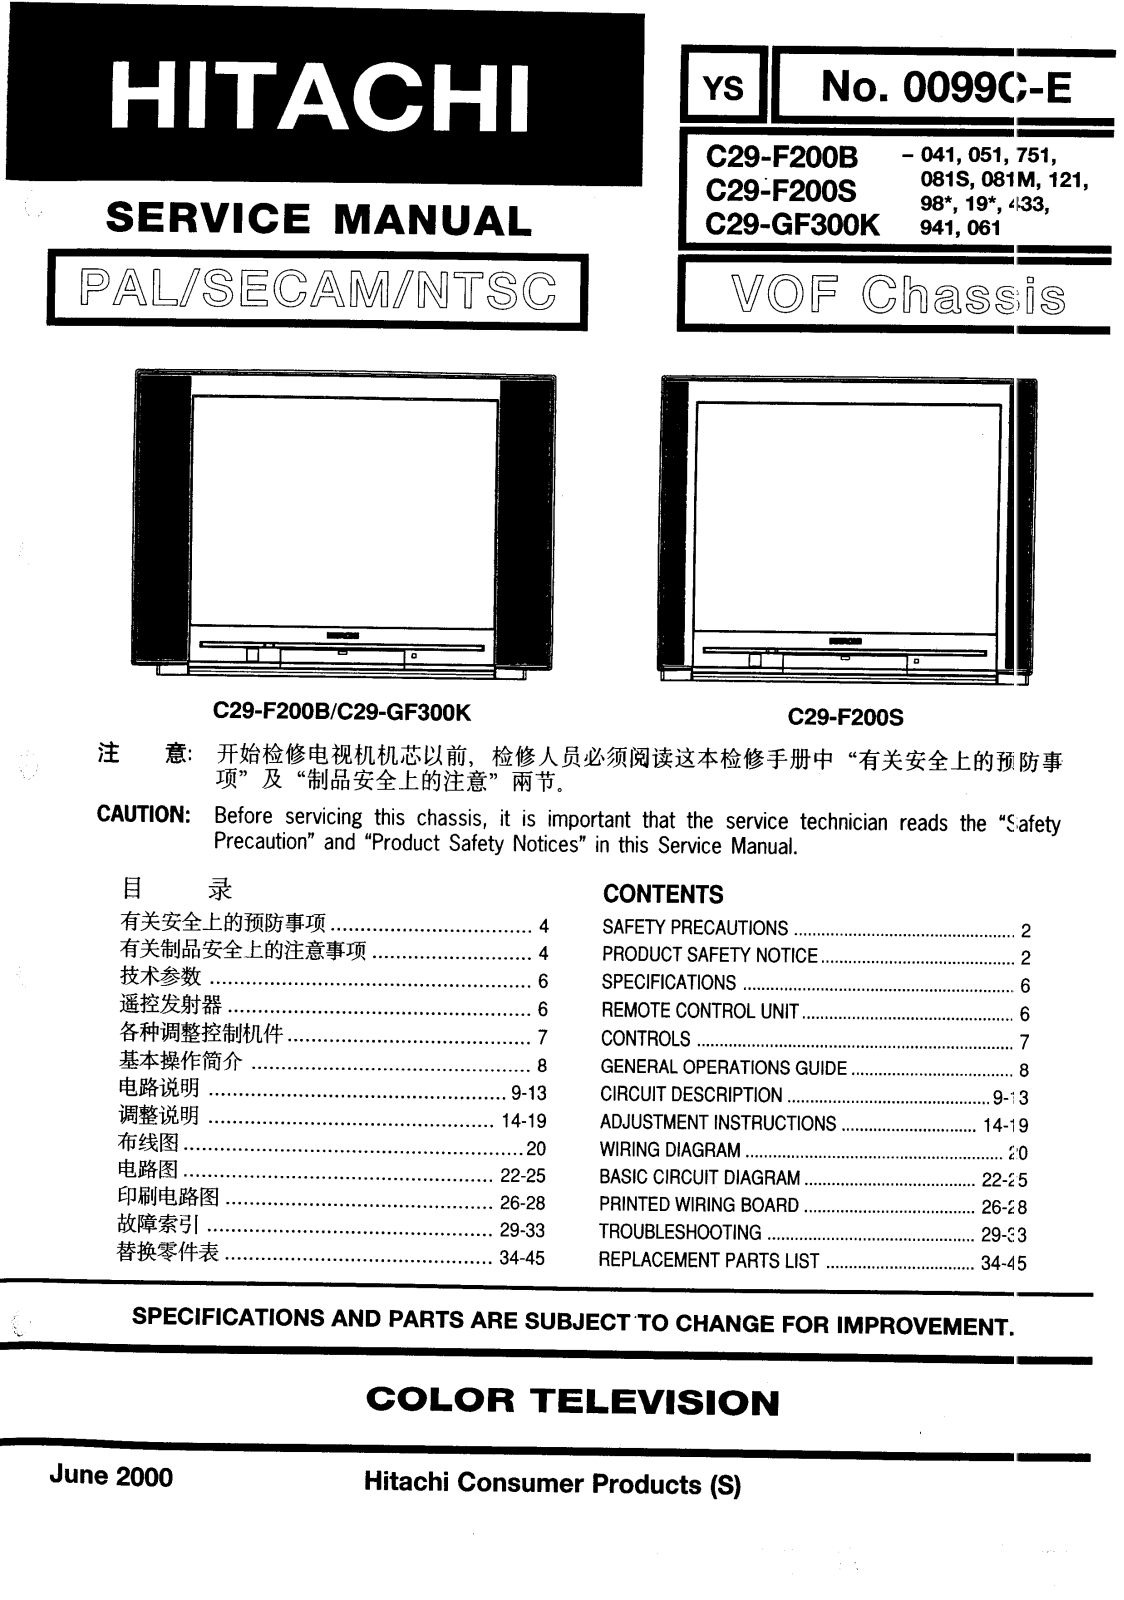 Hitachi C29-F200 Service Manual